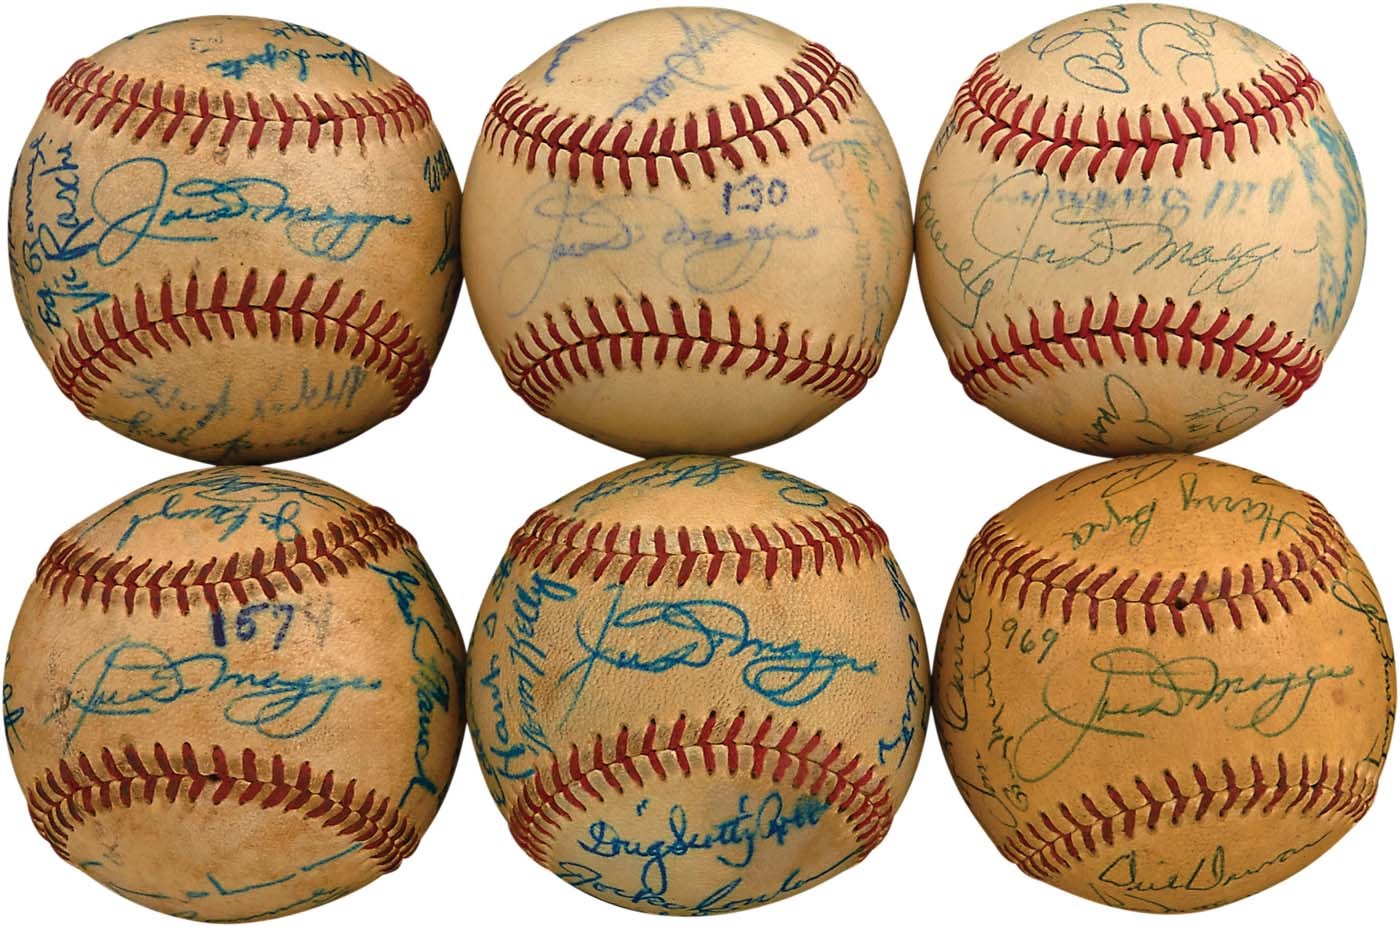 - 1940s-50s Yankees & Stars Signed Baseballs ALL w/Joe DiMaggio (6)